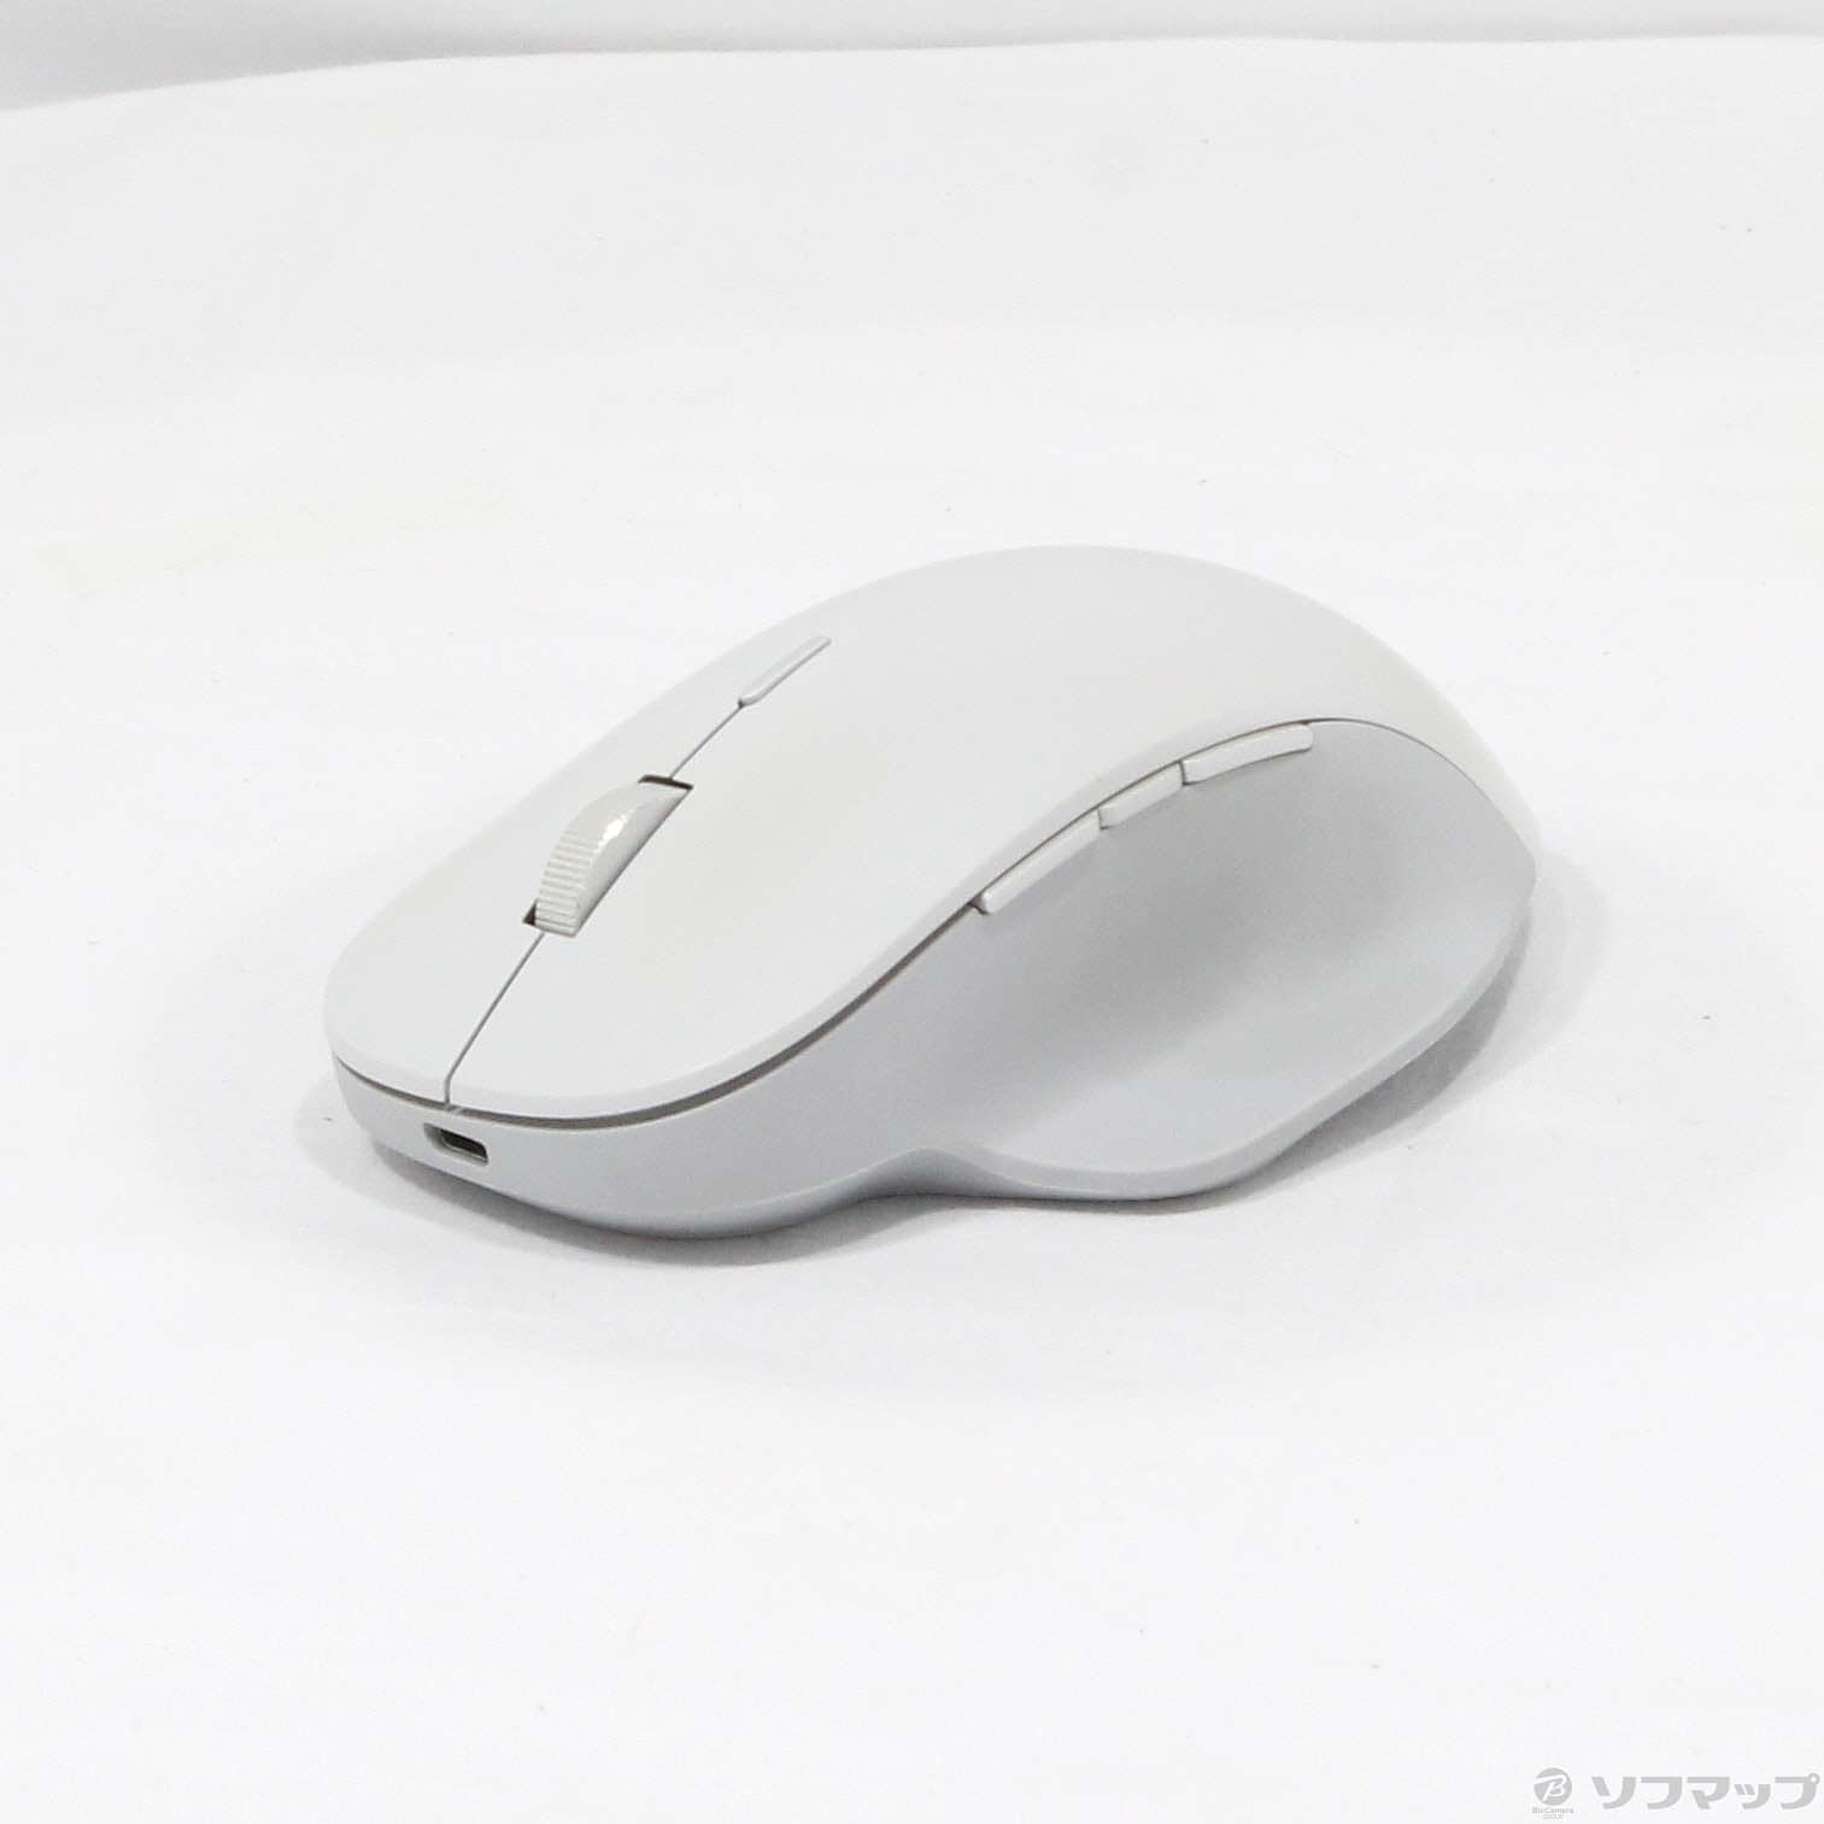 Surface Precision Mouse FTW-00007